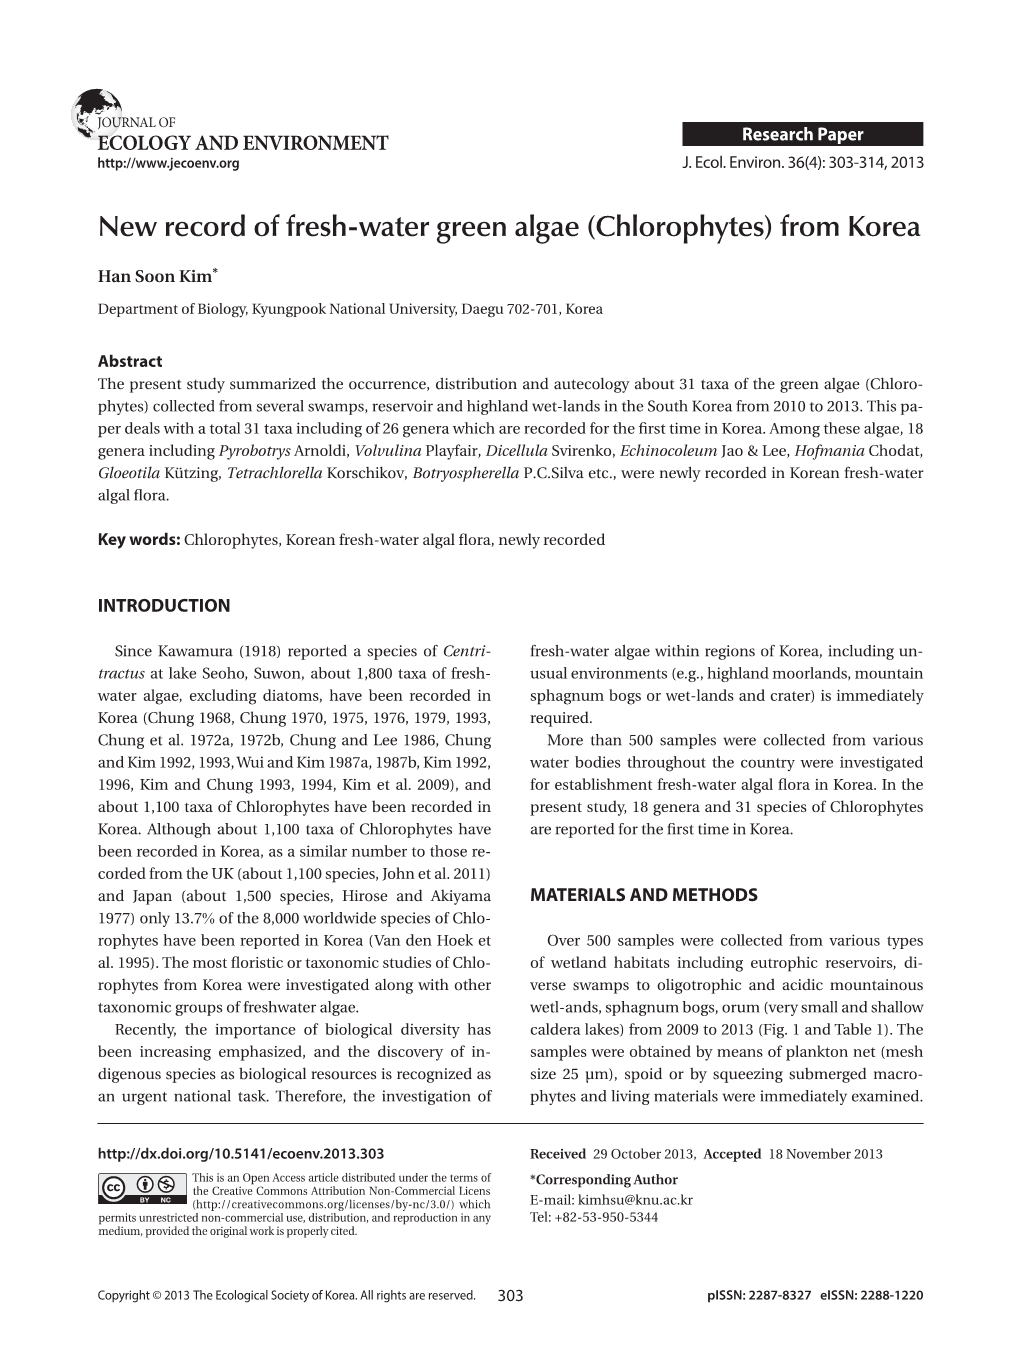 New Record of Fresh-Water Green Algae (Chlorophytes) from Korea